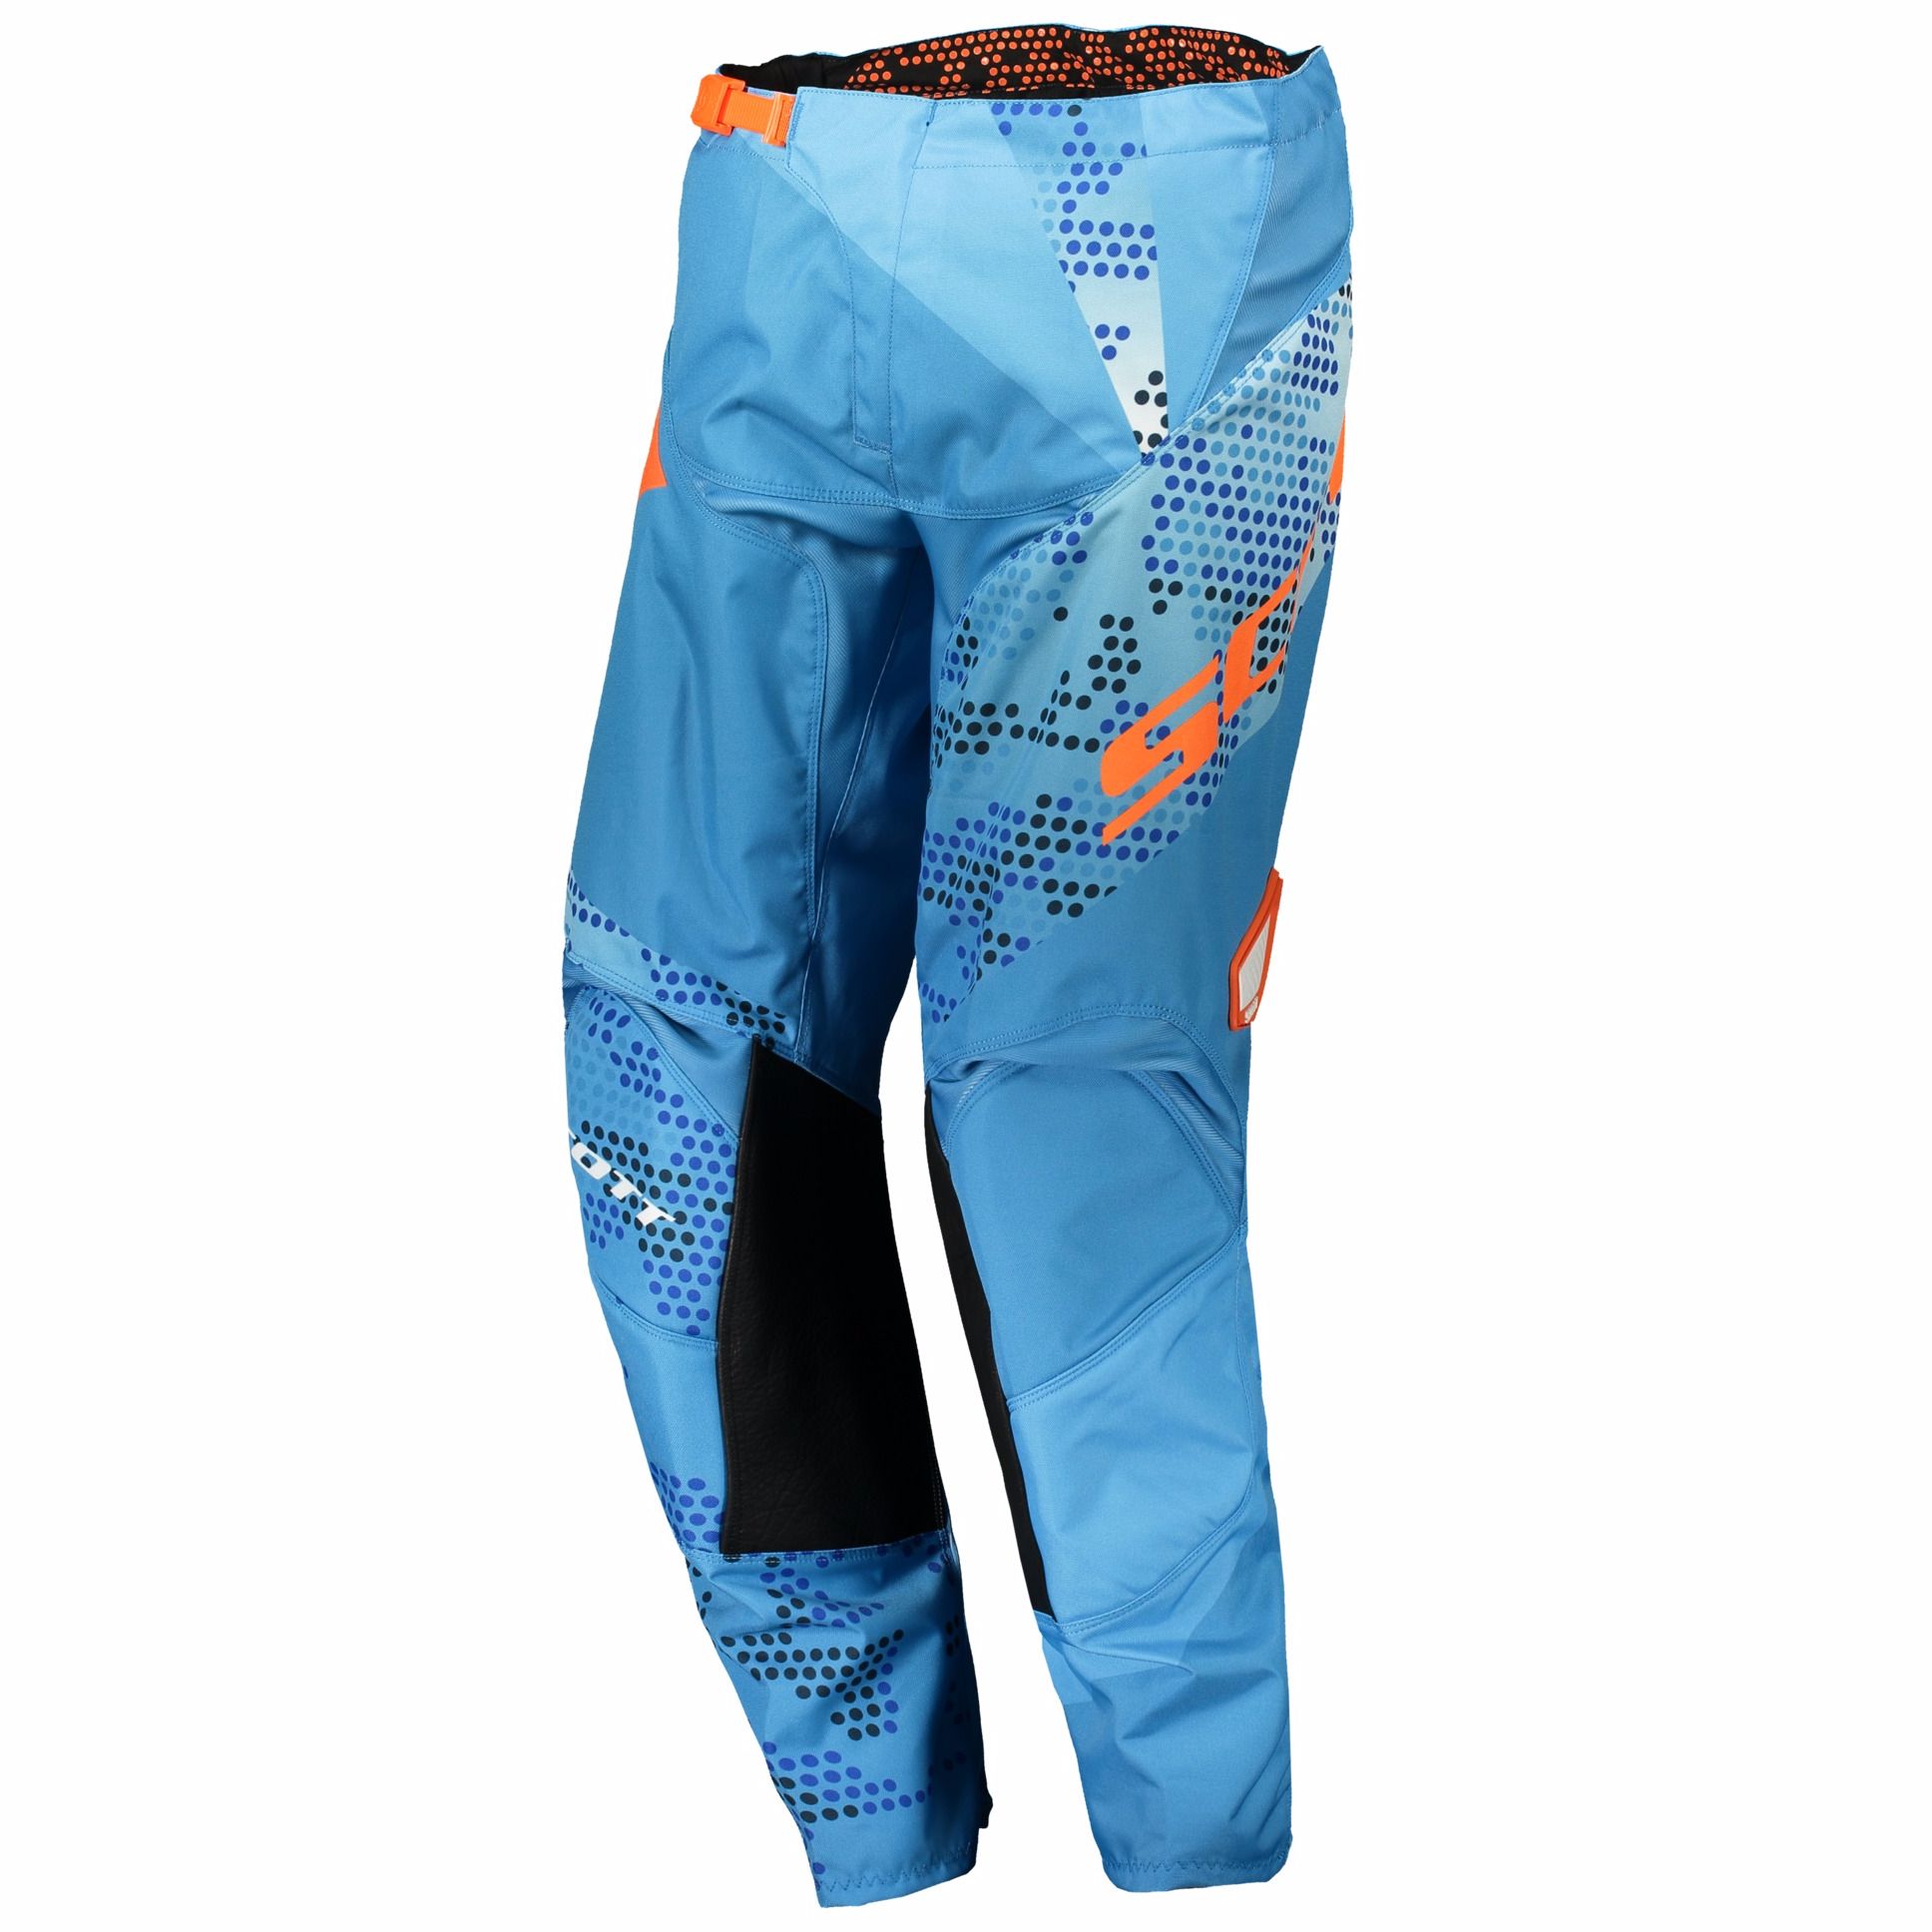 Pantalon Cross Scott 350 Race Junior - Bleu Orange -